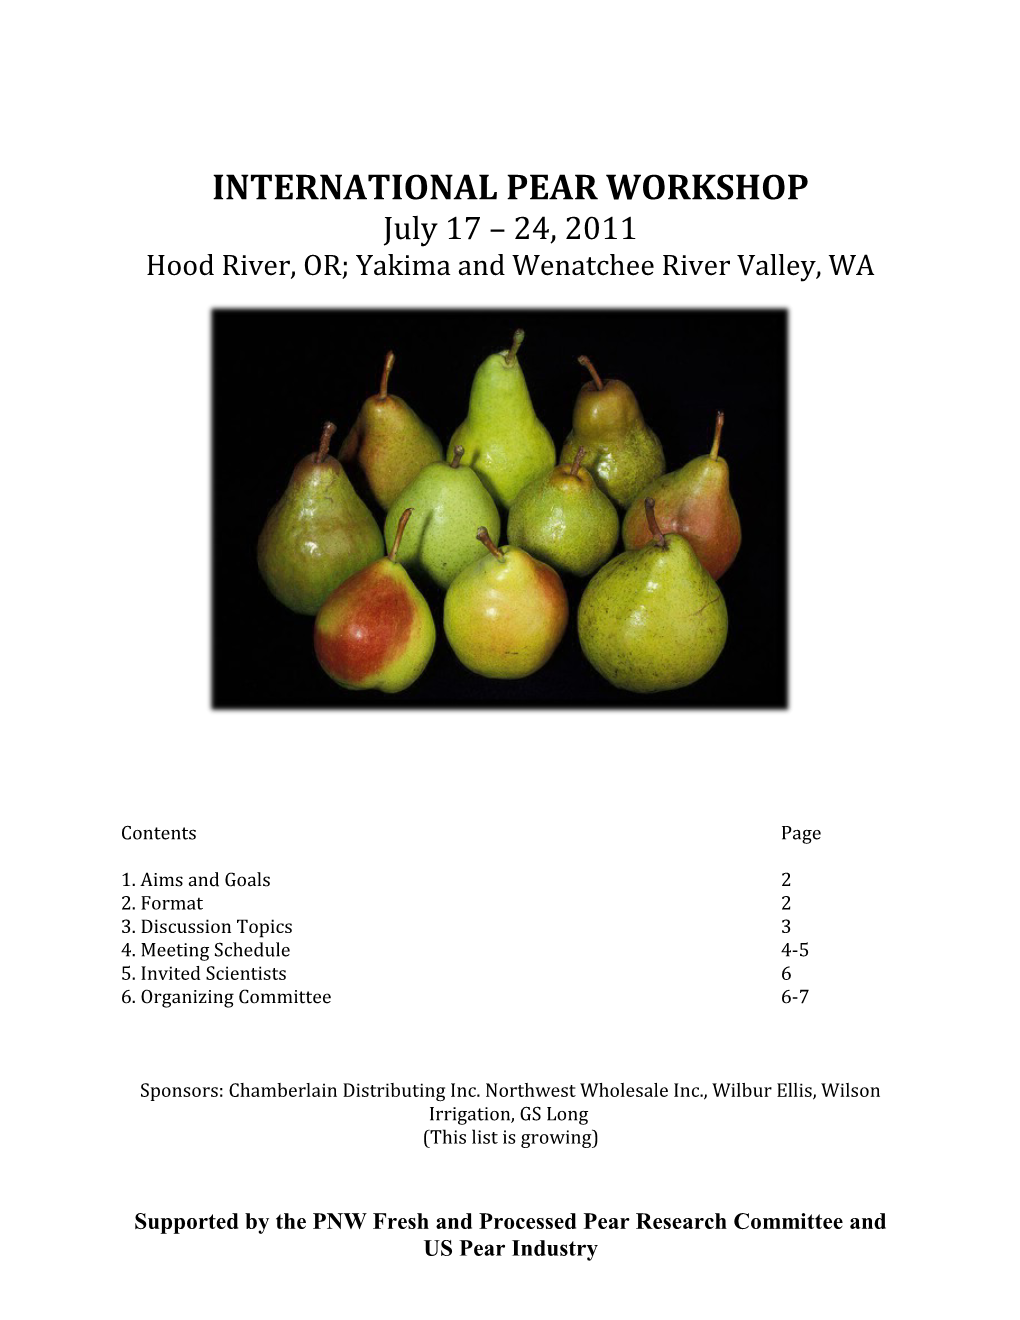 Fully Integrated International Pear Workshopjuly 17-24, 2011